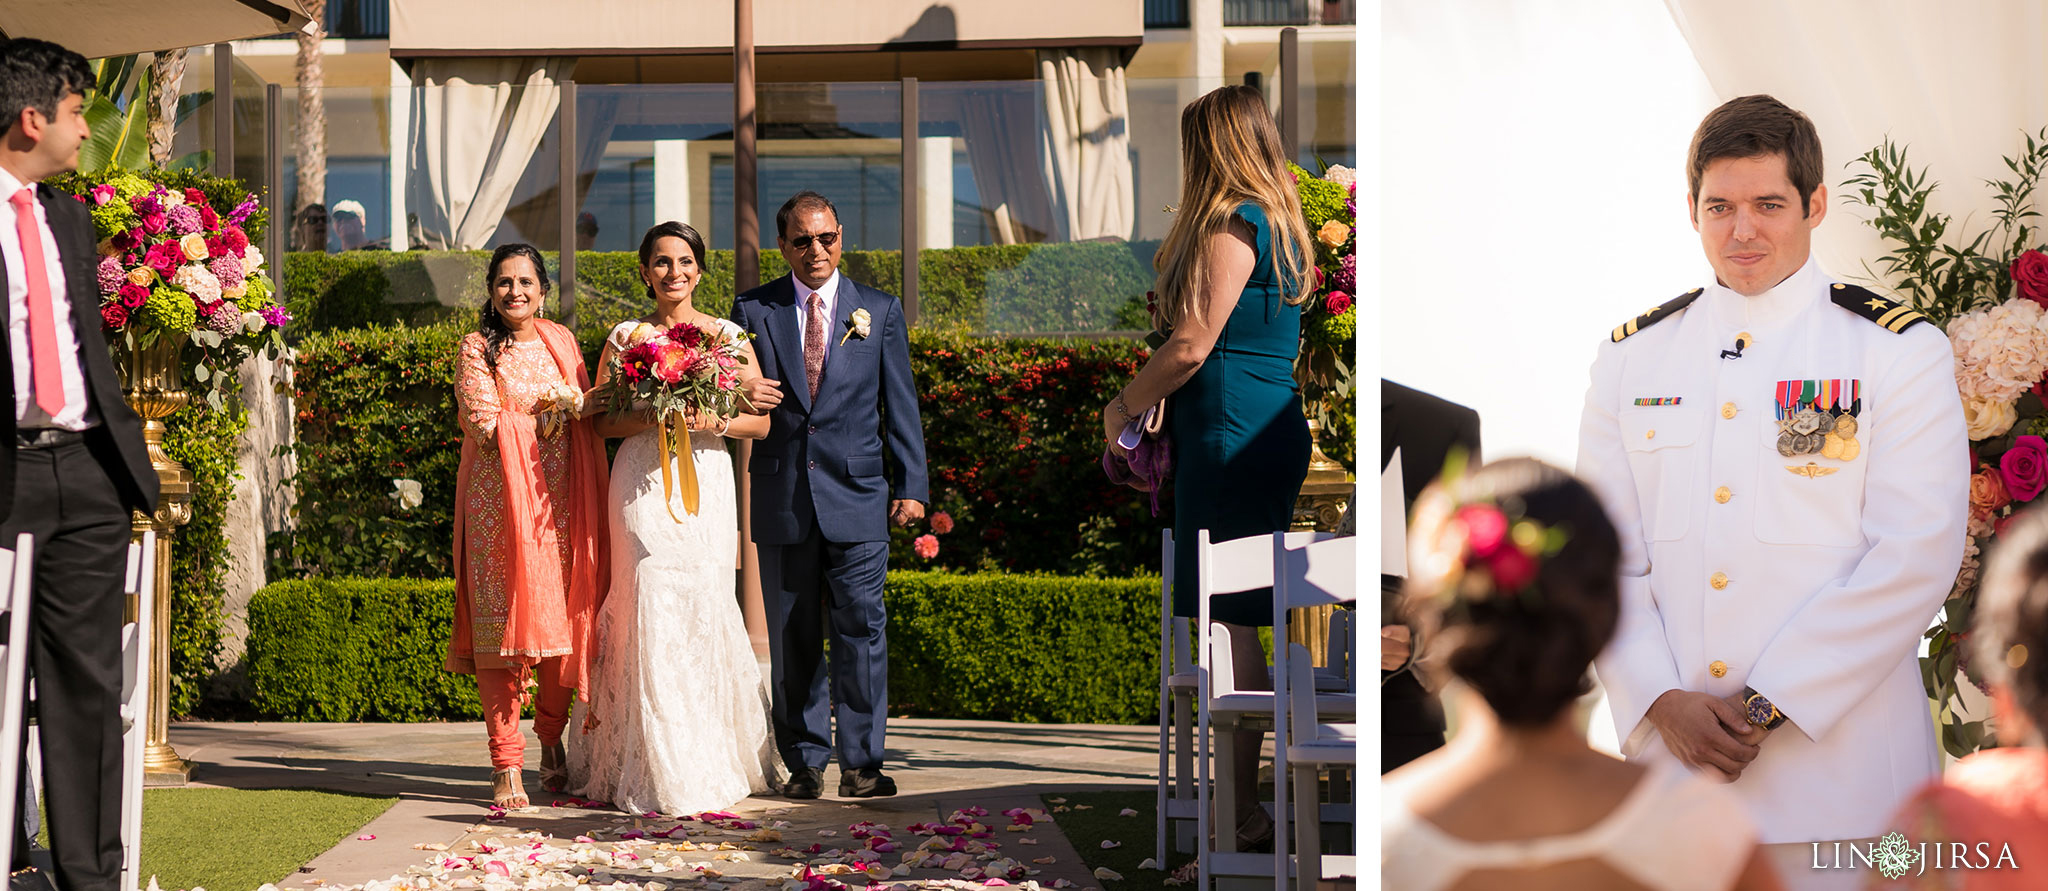 14 newport beach marriott hotel wedding ceremony photography 1